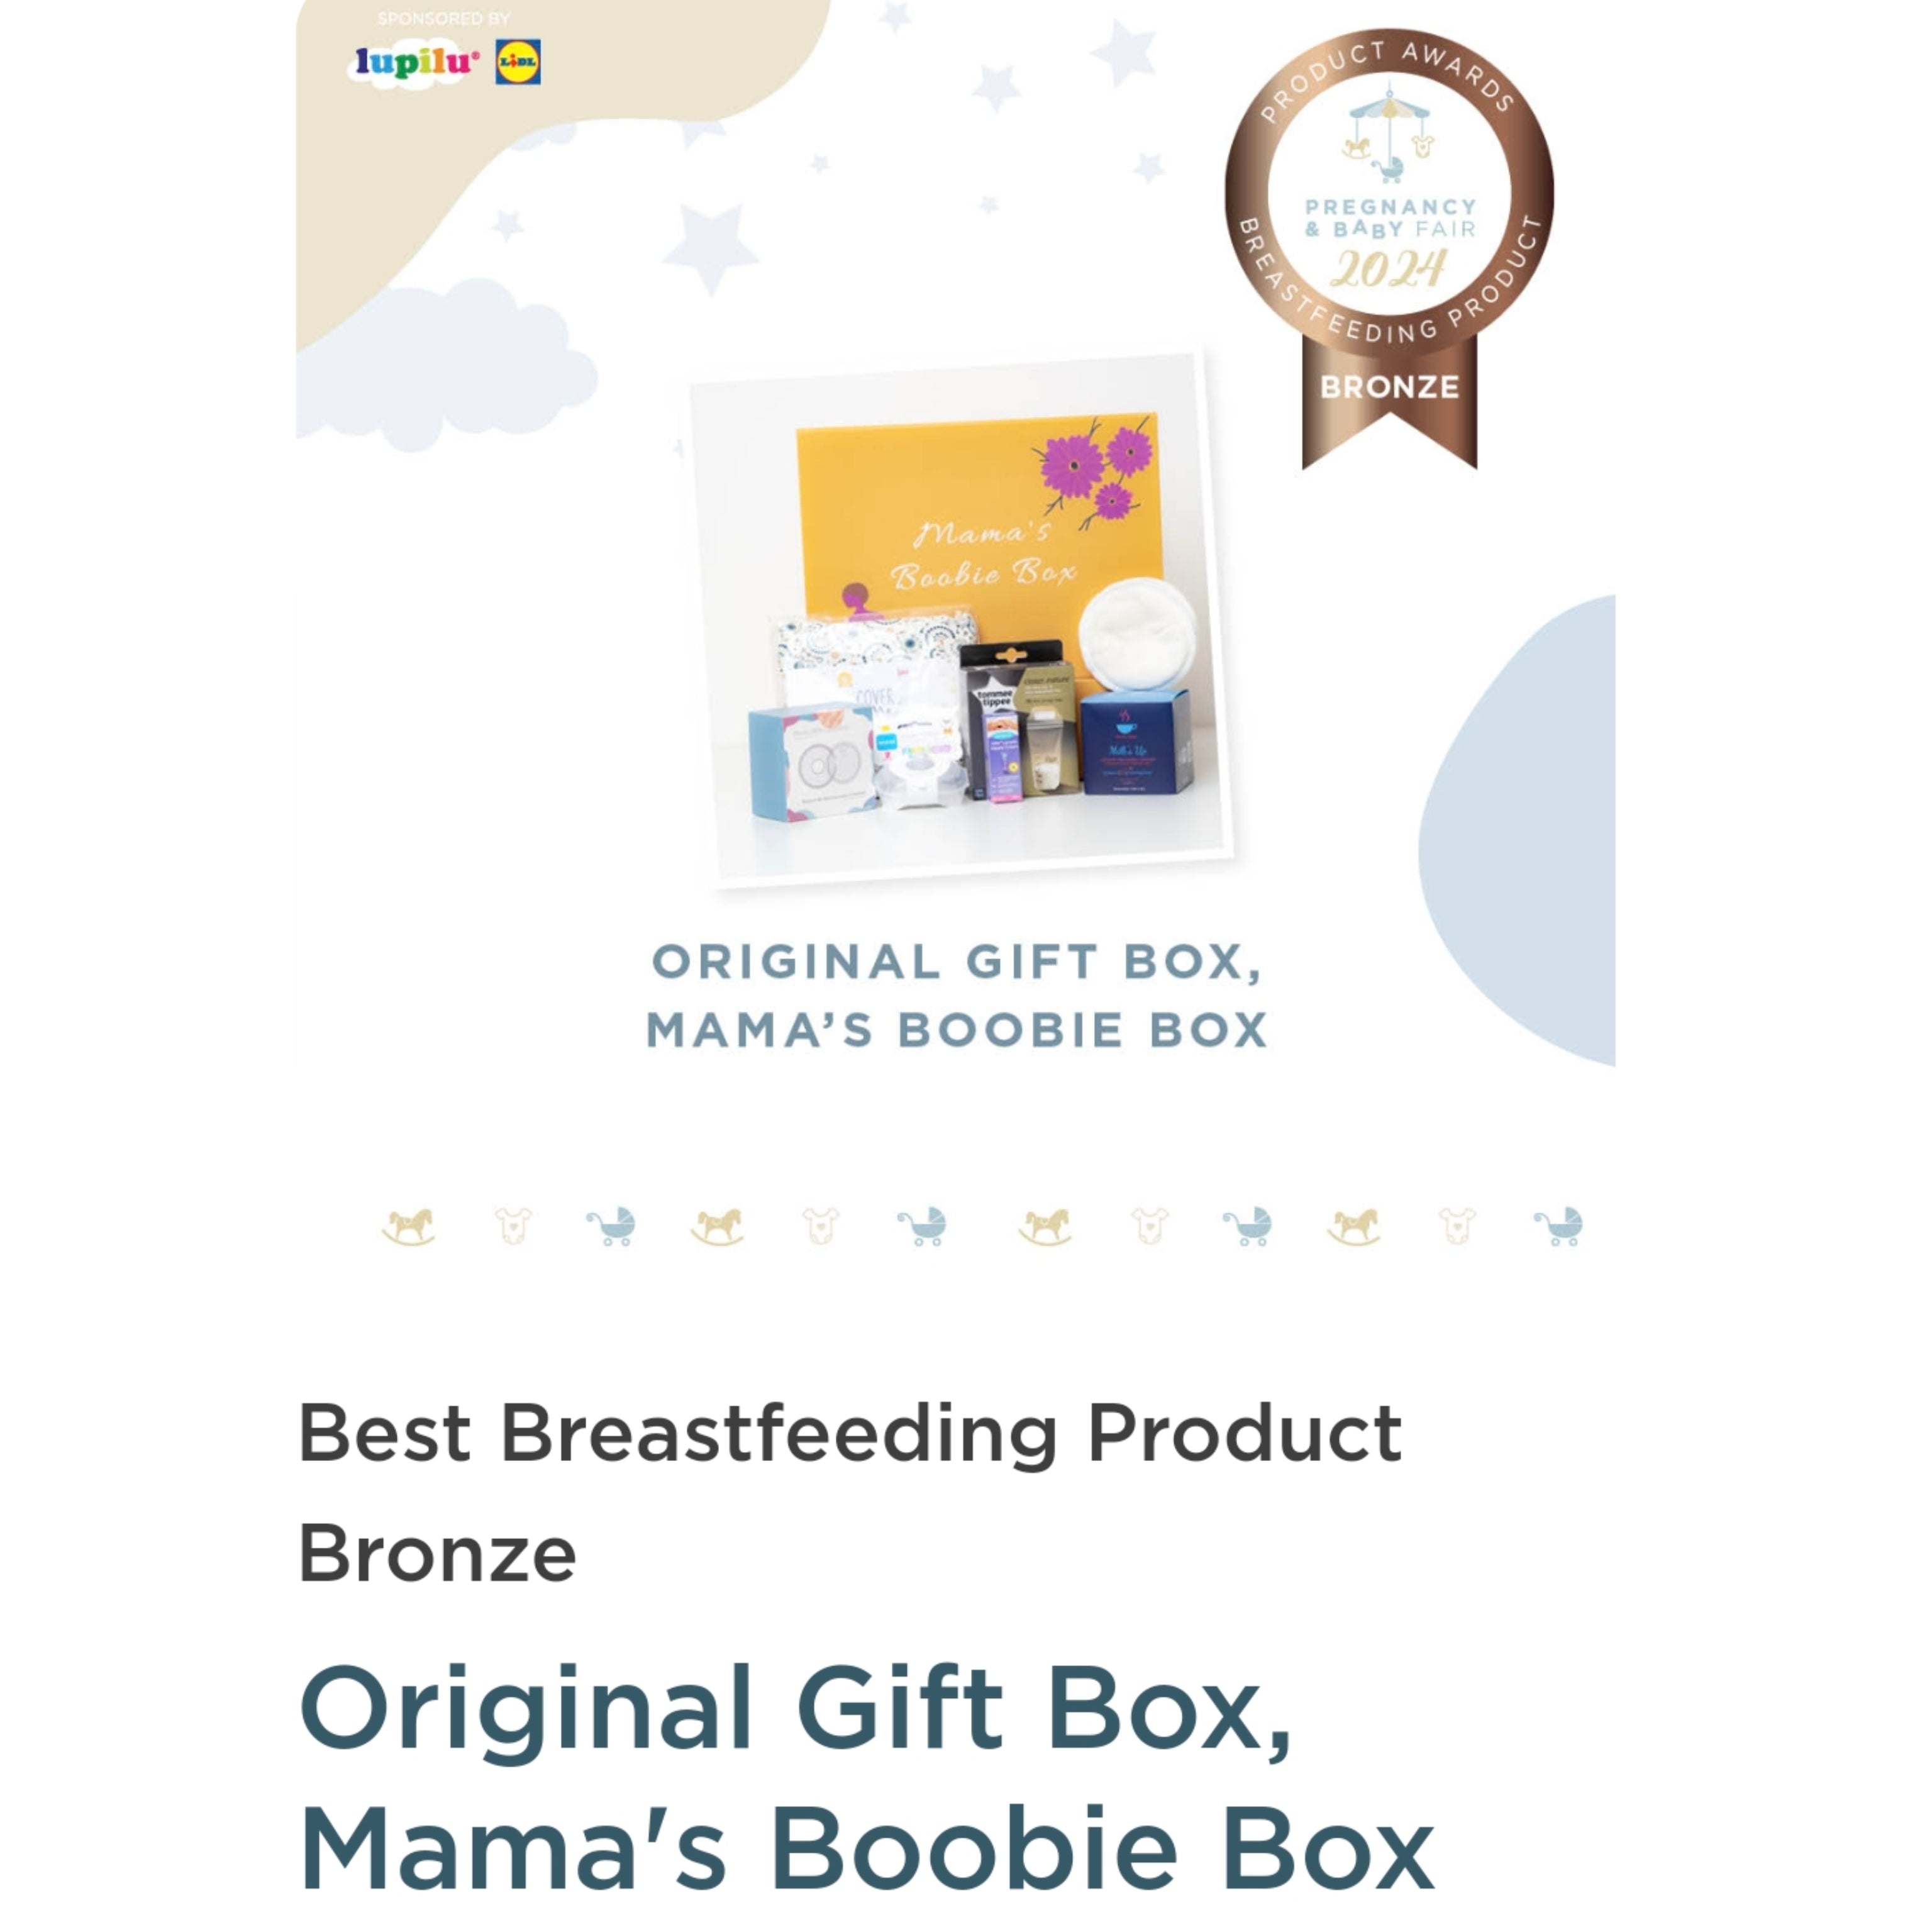 Award for Original Gift Box